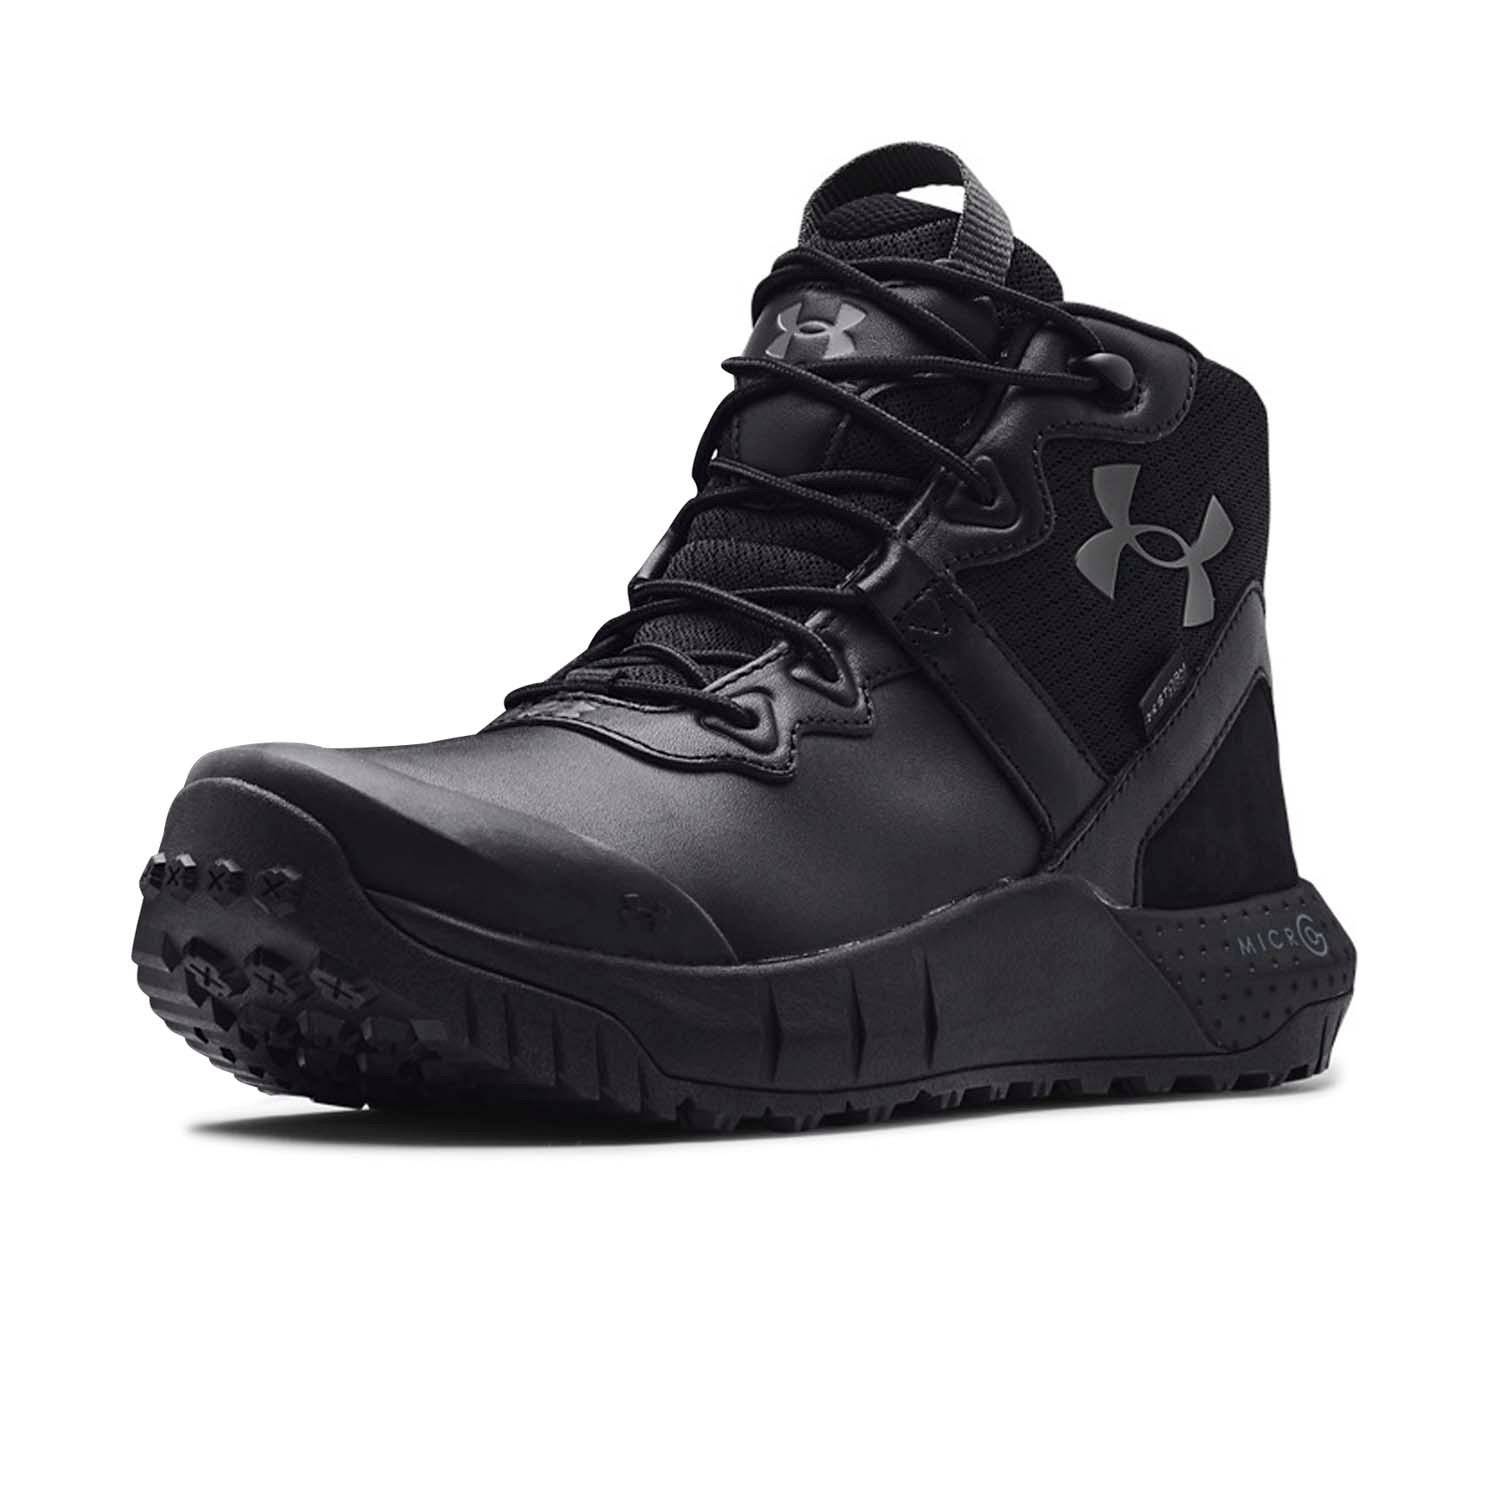 UA Women's Micro G Valsetz Mid Leather WP Tactical Boots